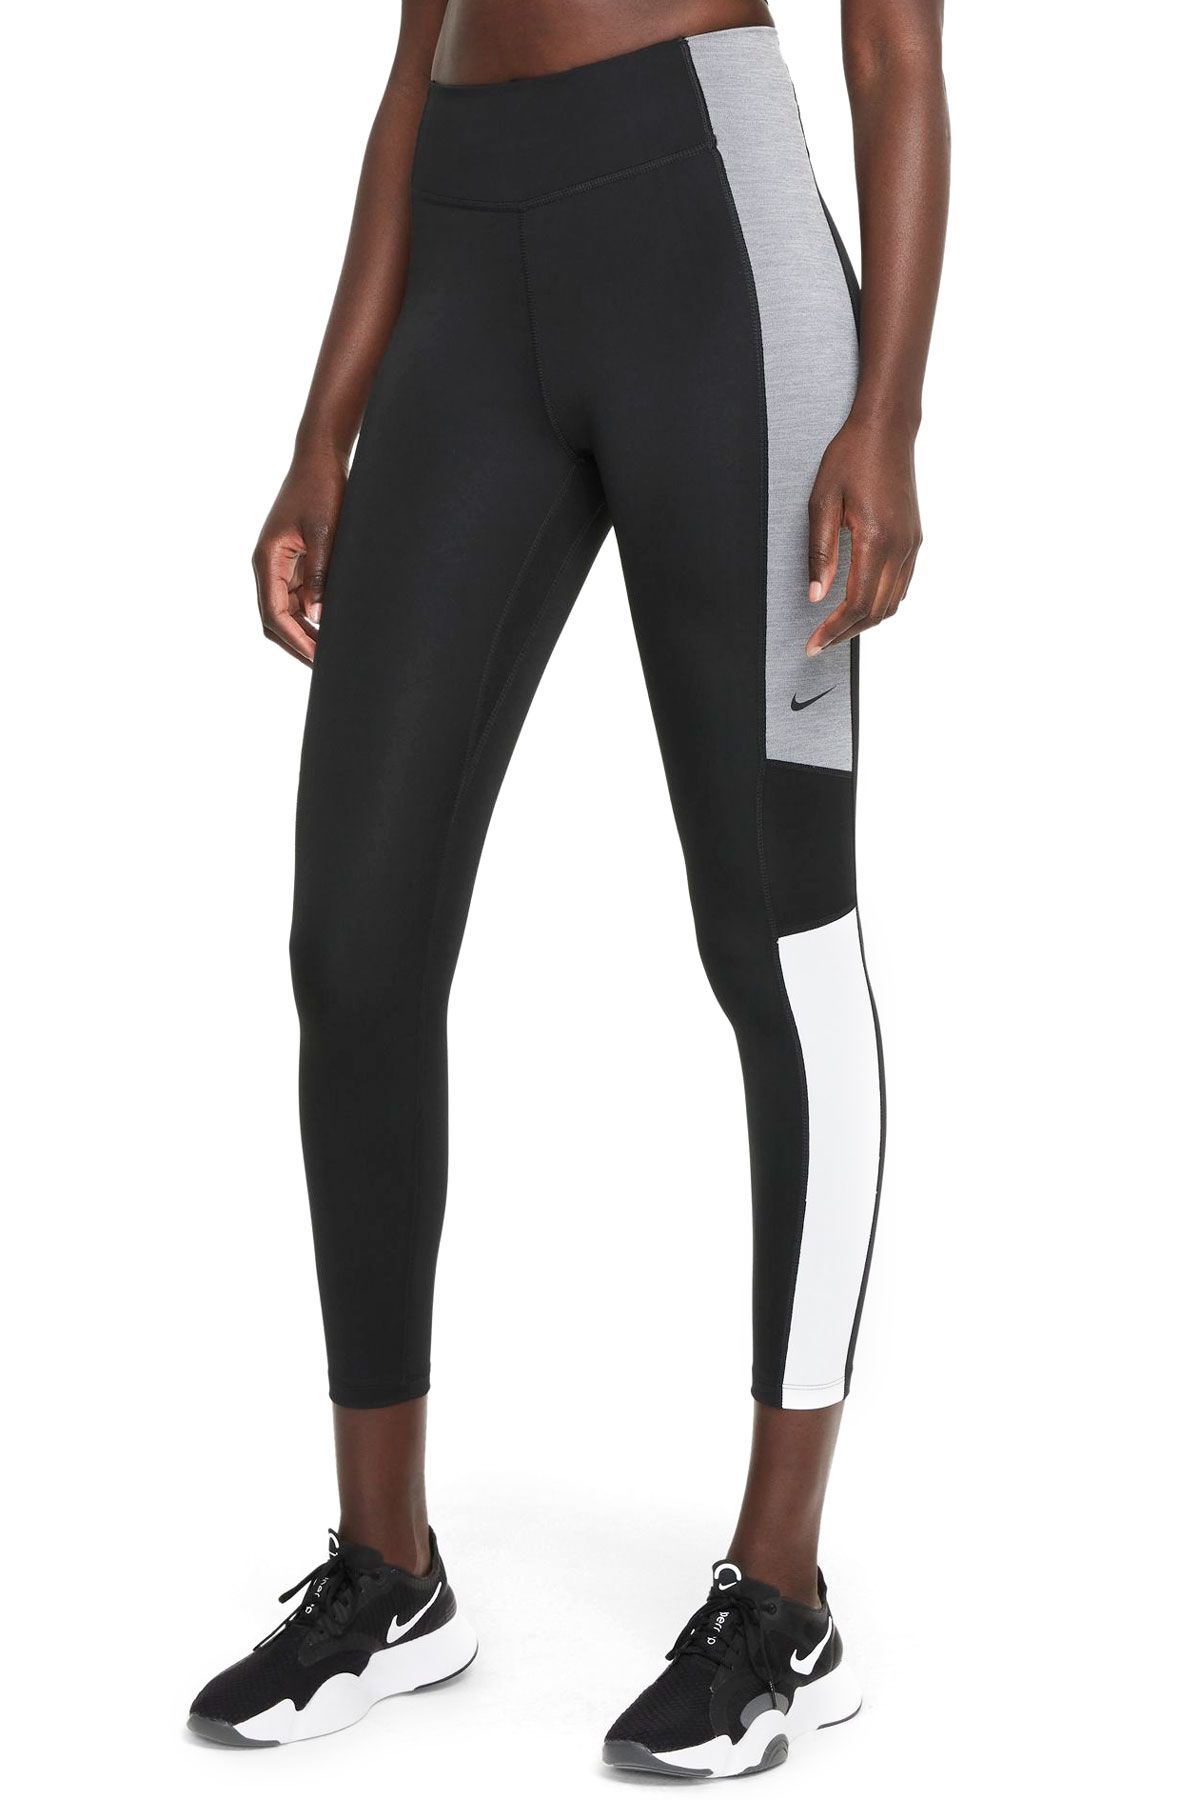 Nike One Training Dri-FIT mid-rise 7/8 gym leggings in black